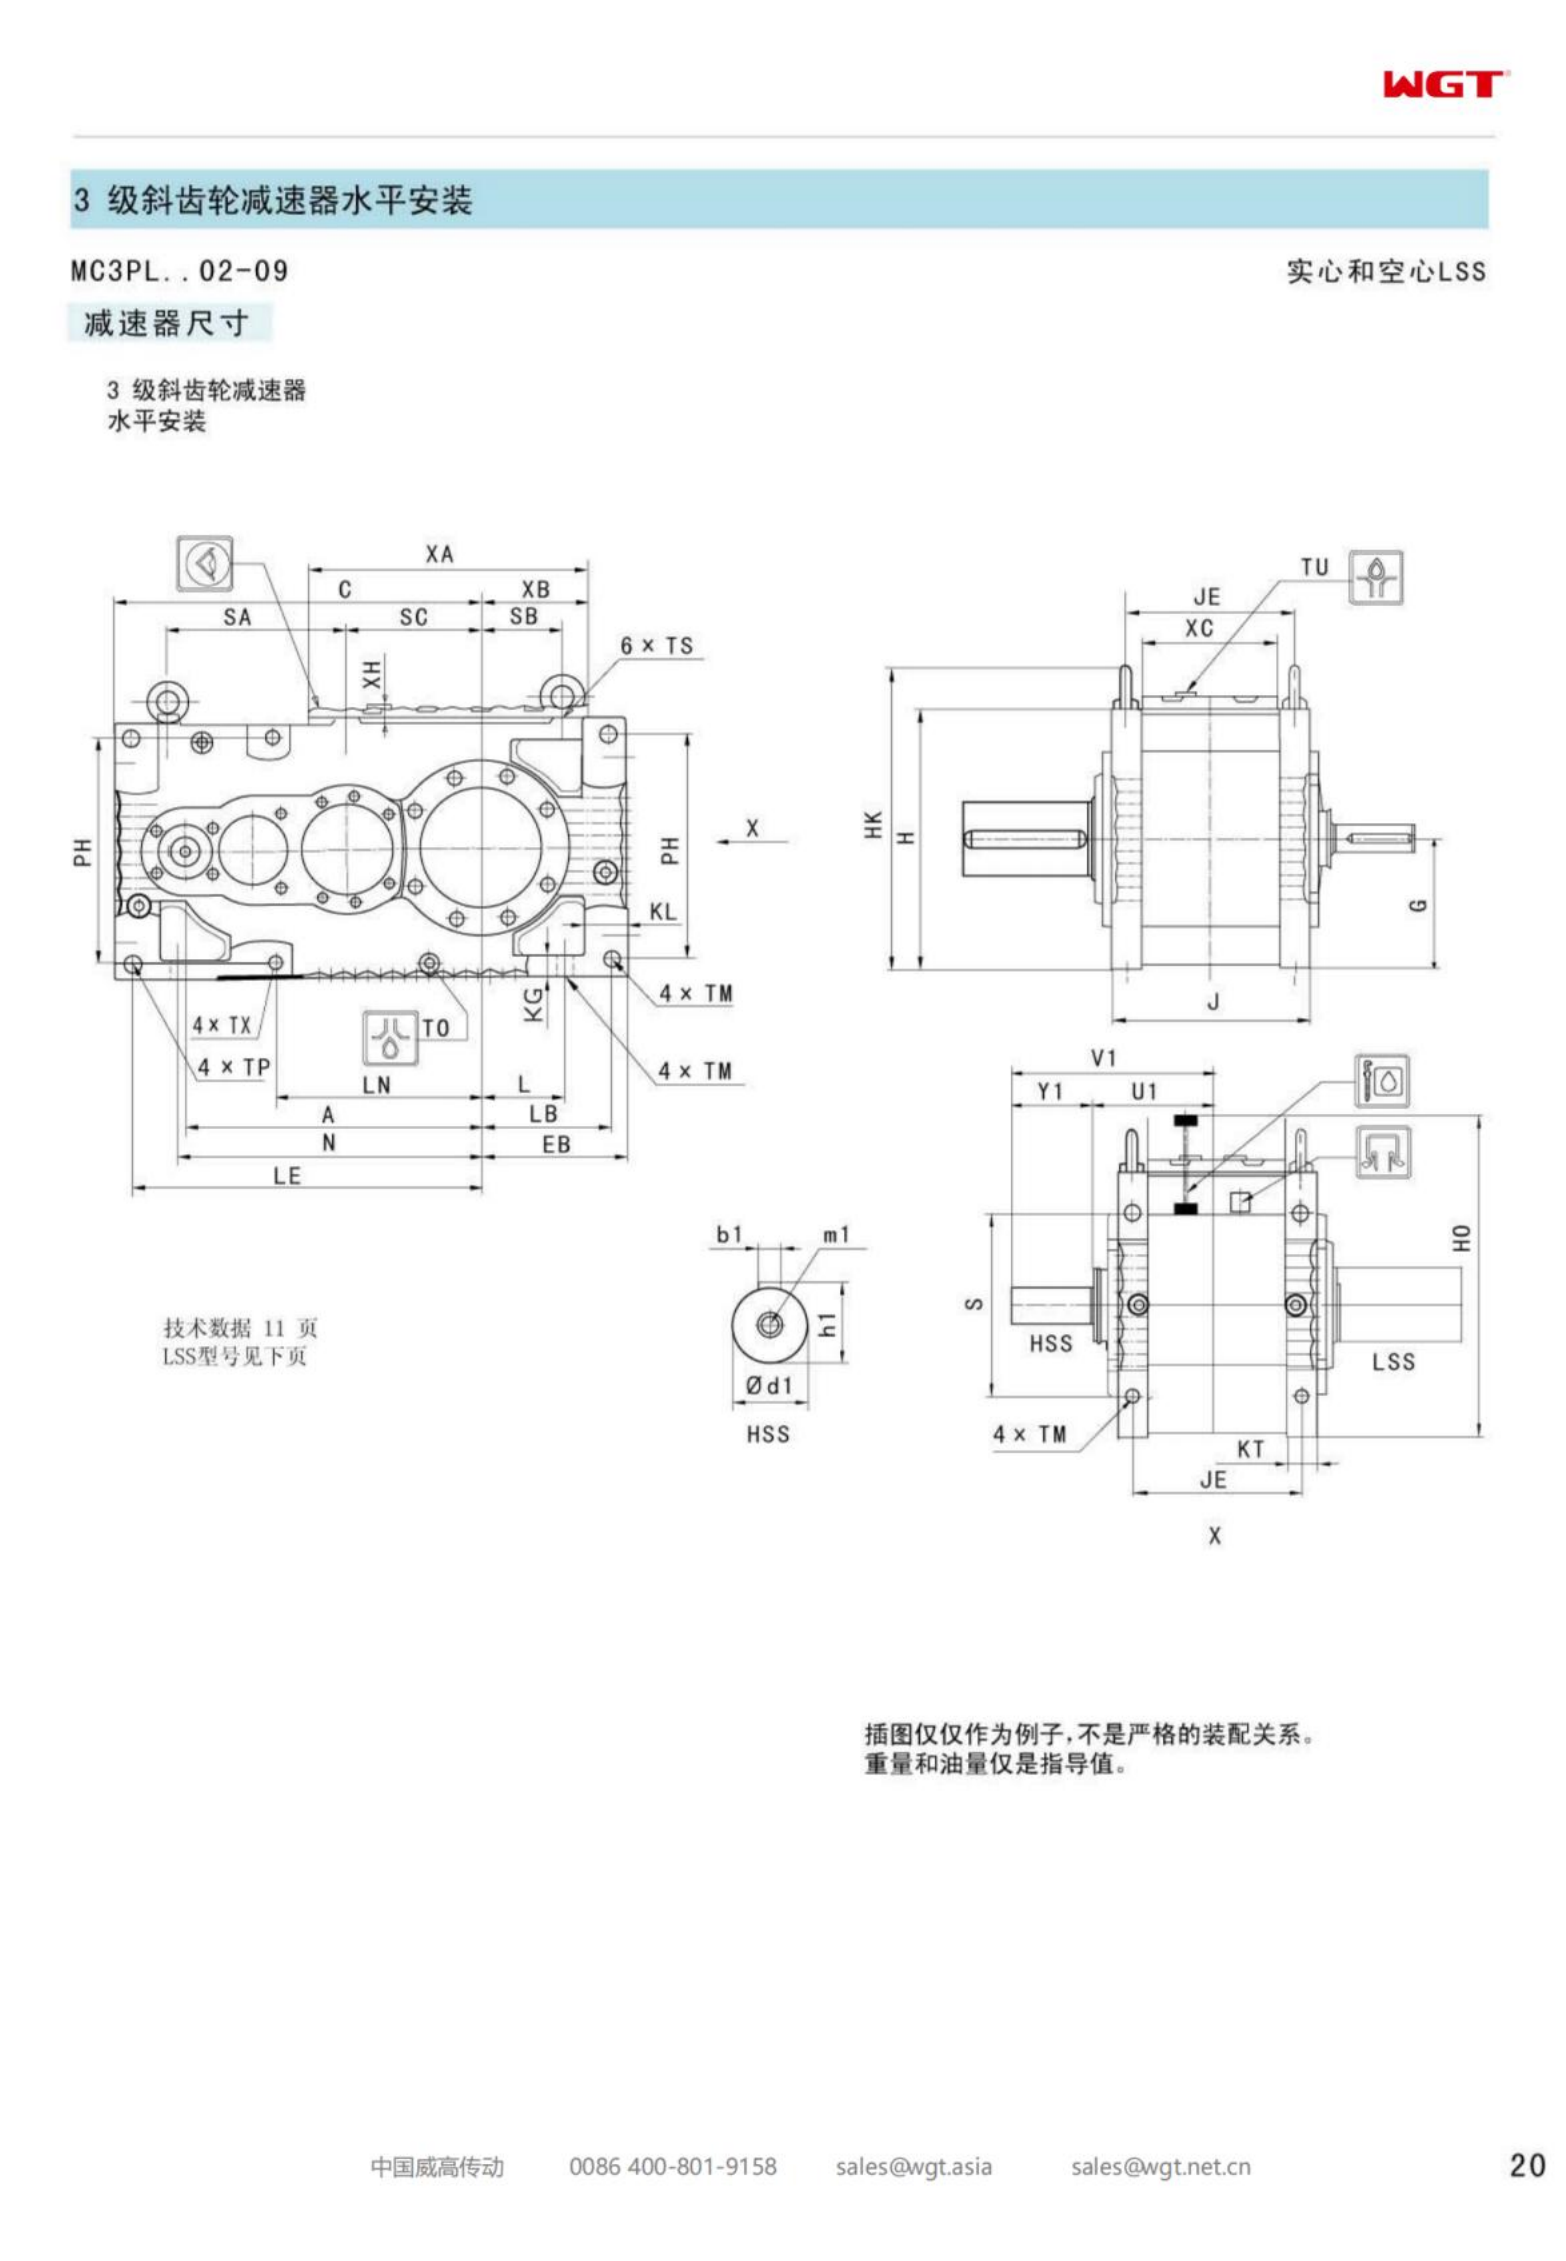 MC3PLHT03 replaces _SEW_MC_Series gearbox (patent)